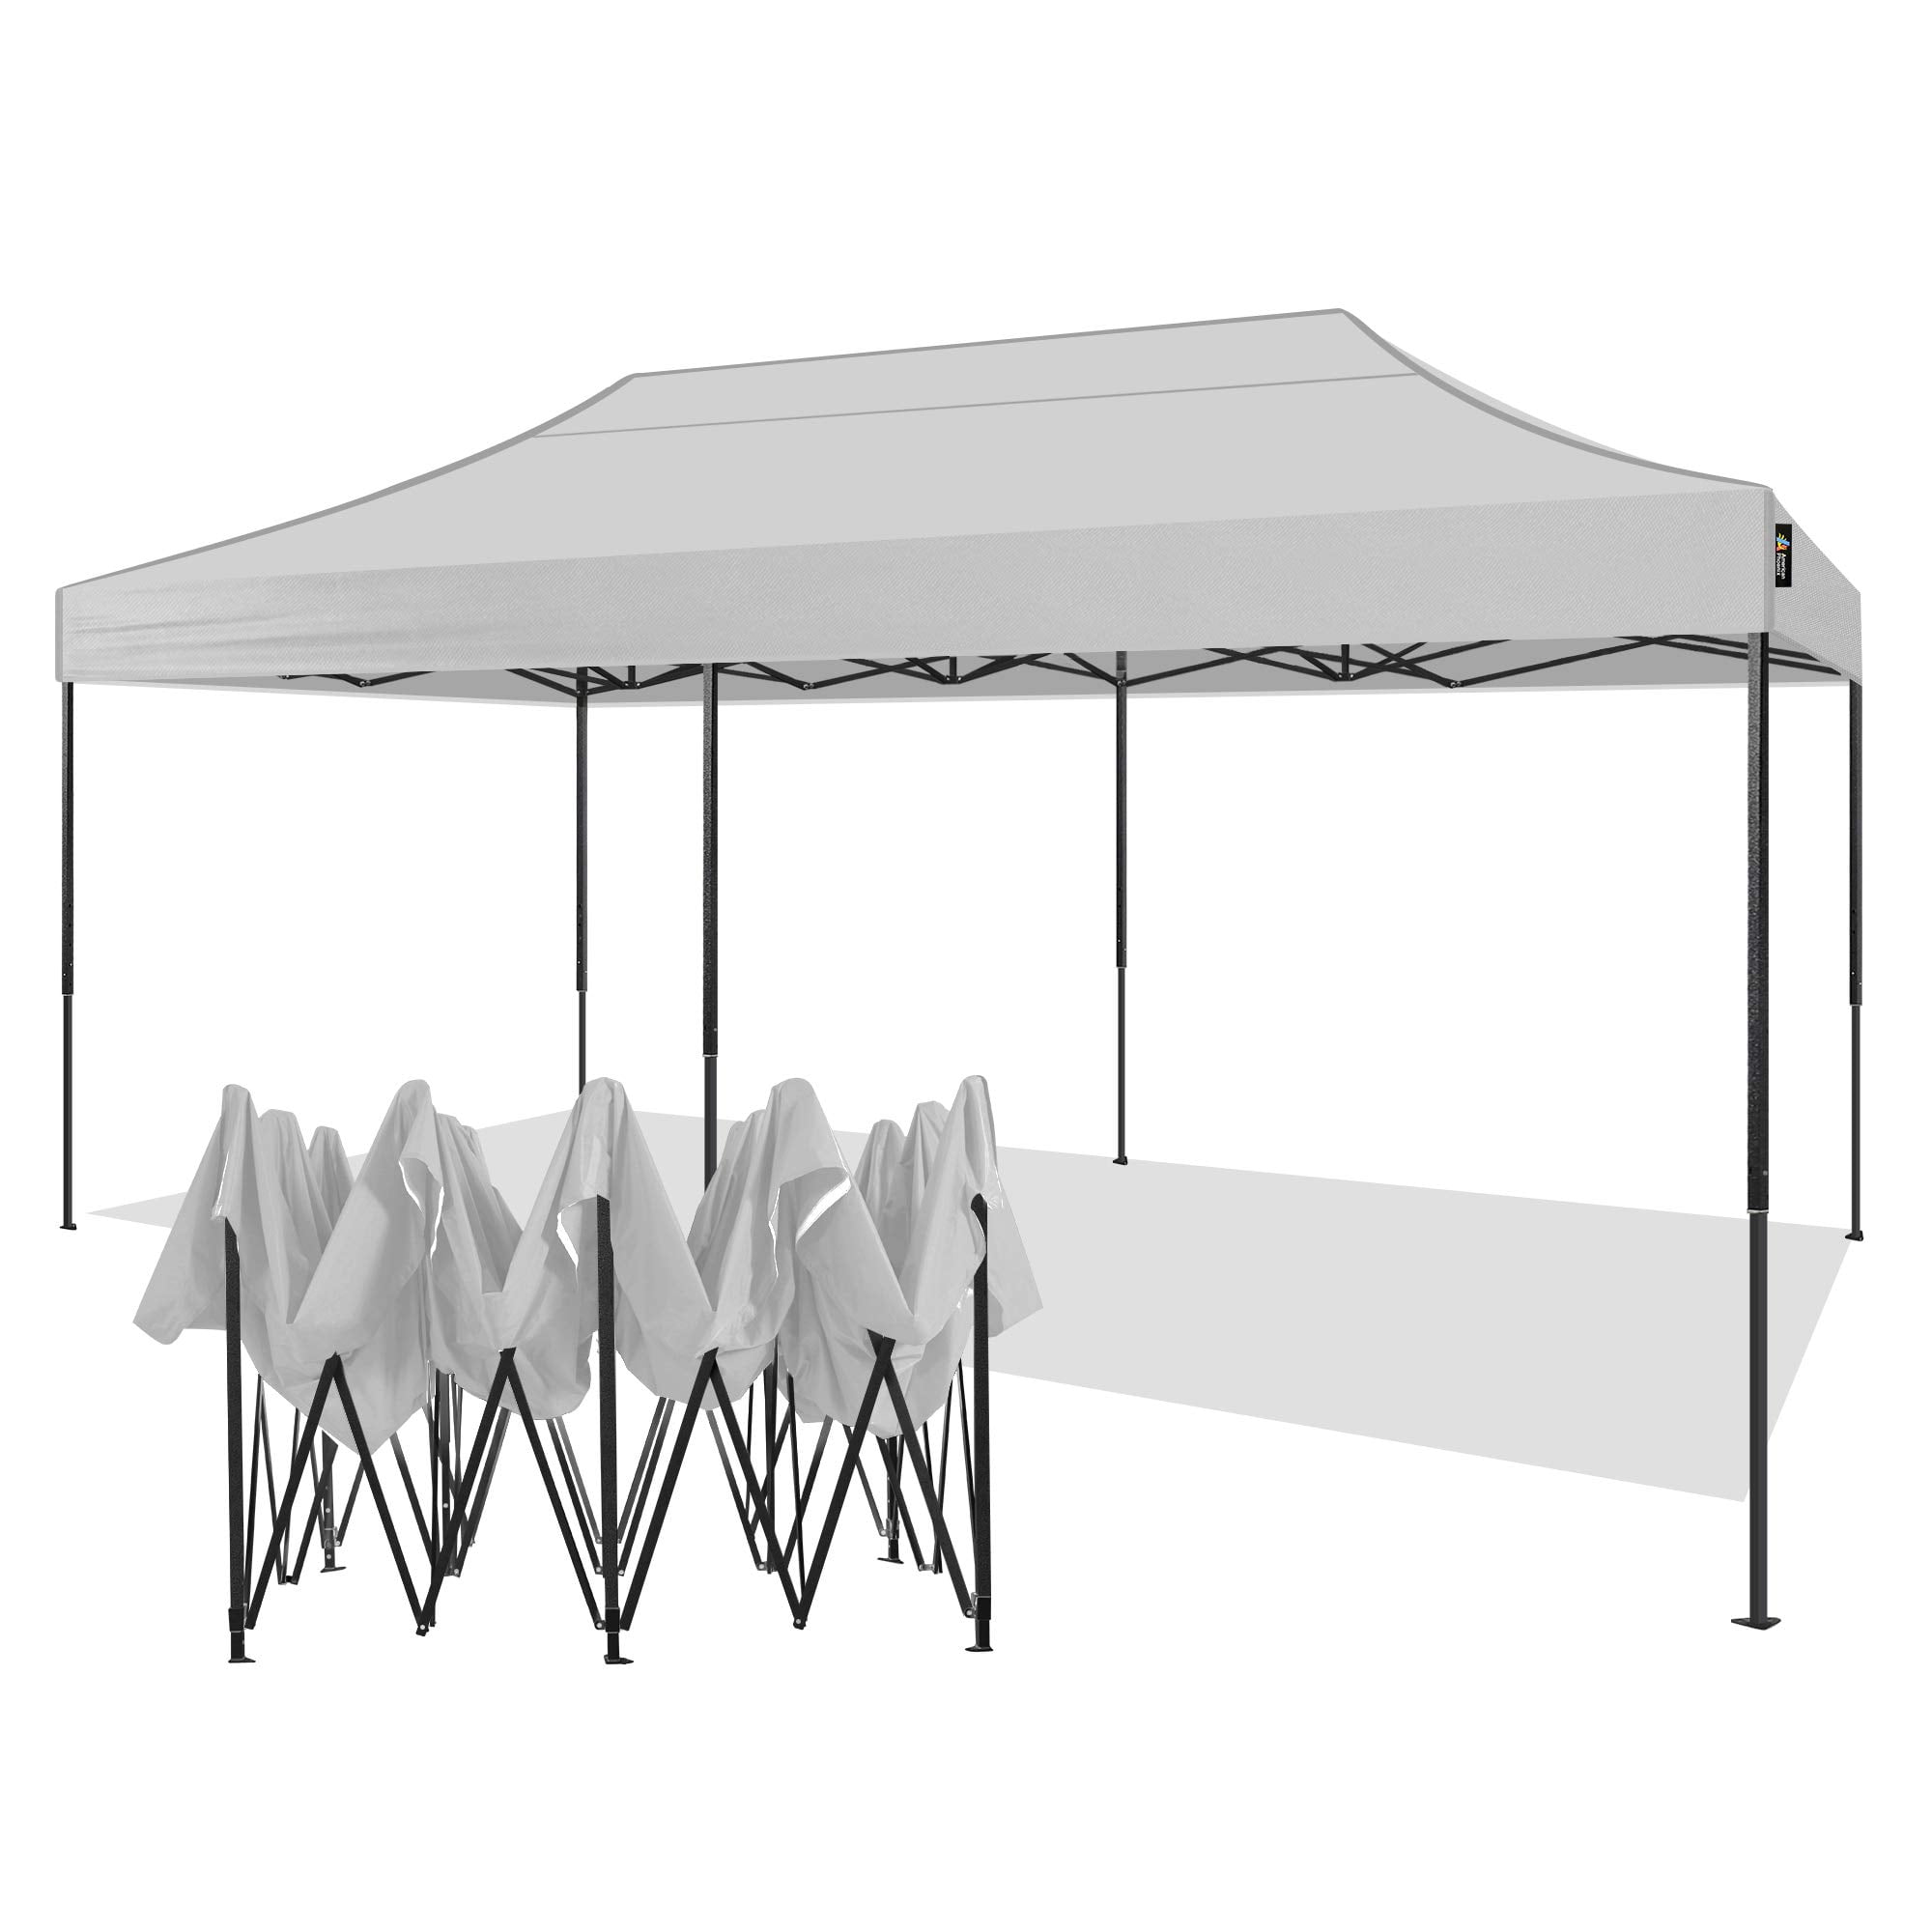 AMERICAN PHOENIX 10x15 Ft Blue Pop Up Canopy Tent Portable Commercial Instant 